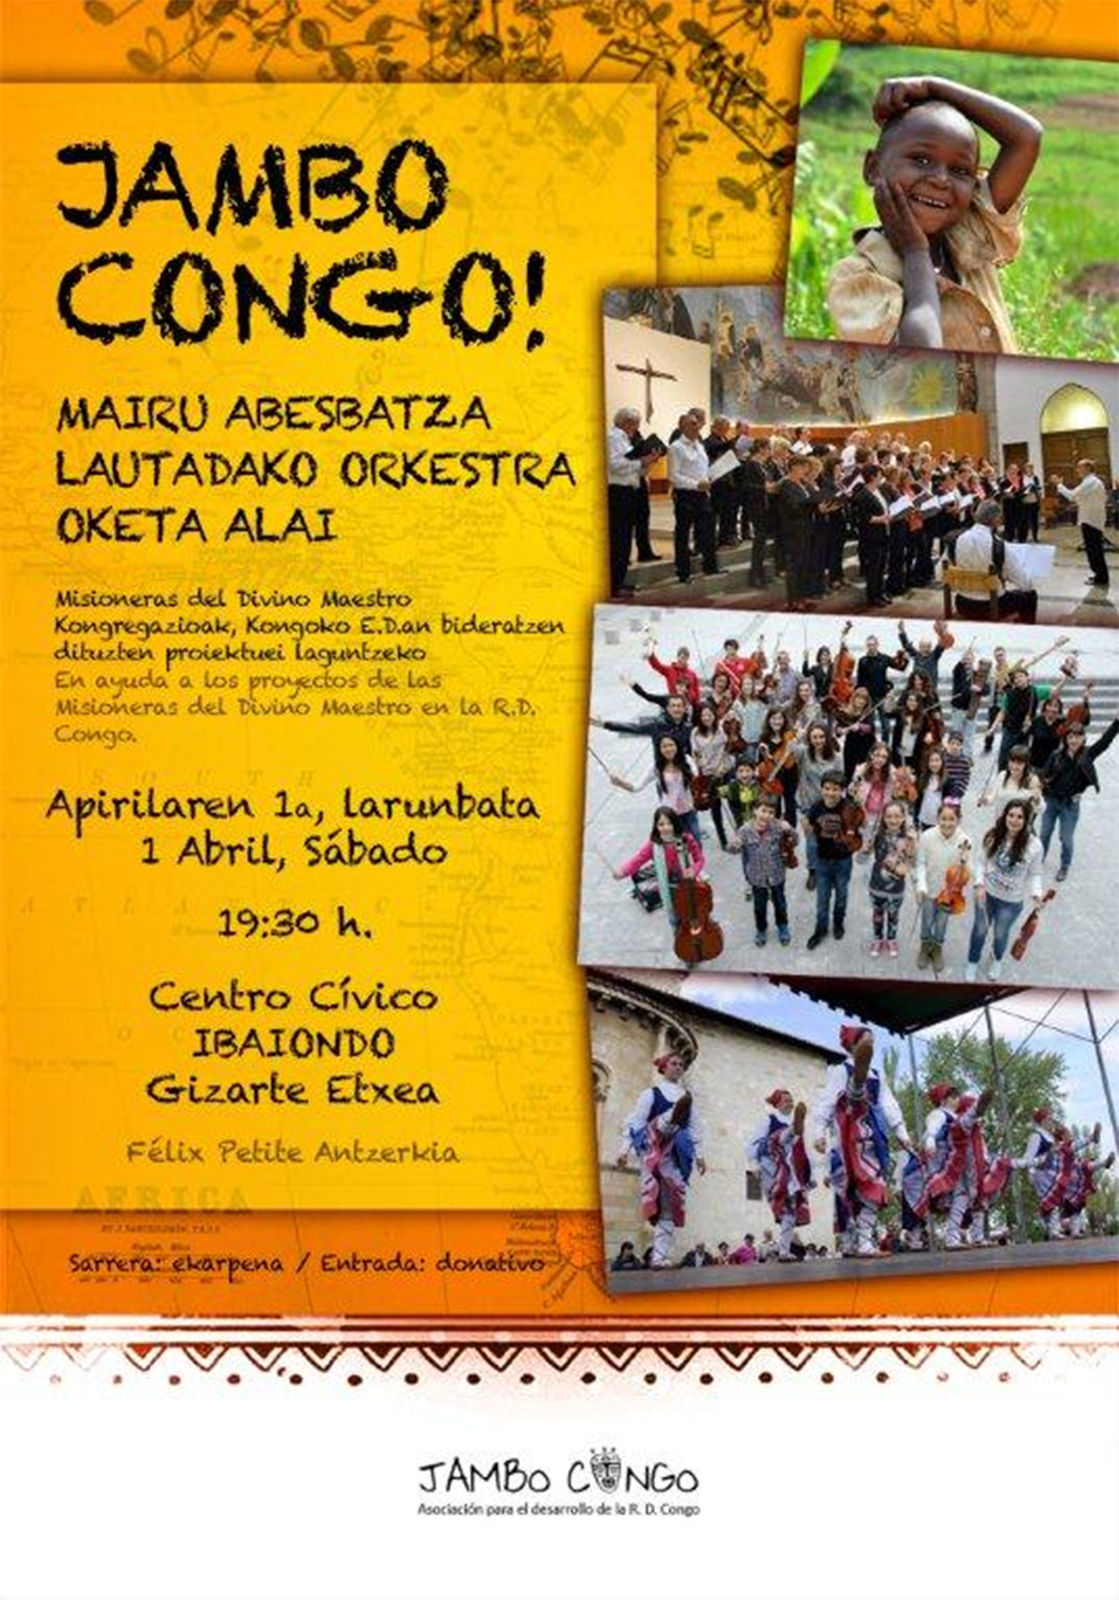 Festival benéfico en favor de la ONG JAMBO CONGO, con Mairu abesbatza, Oketa Dantza Taldea, Araba txistulariak y Lautadako Orkesta, sábado 1 de abril en el C.C. Ibaiondo